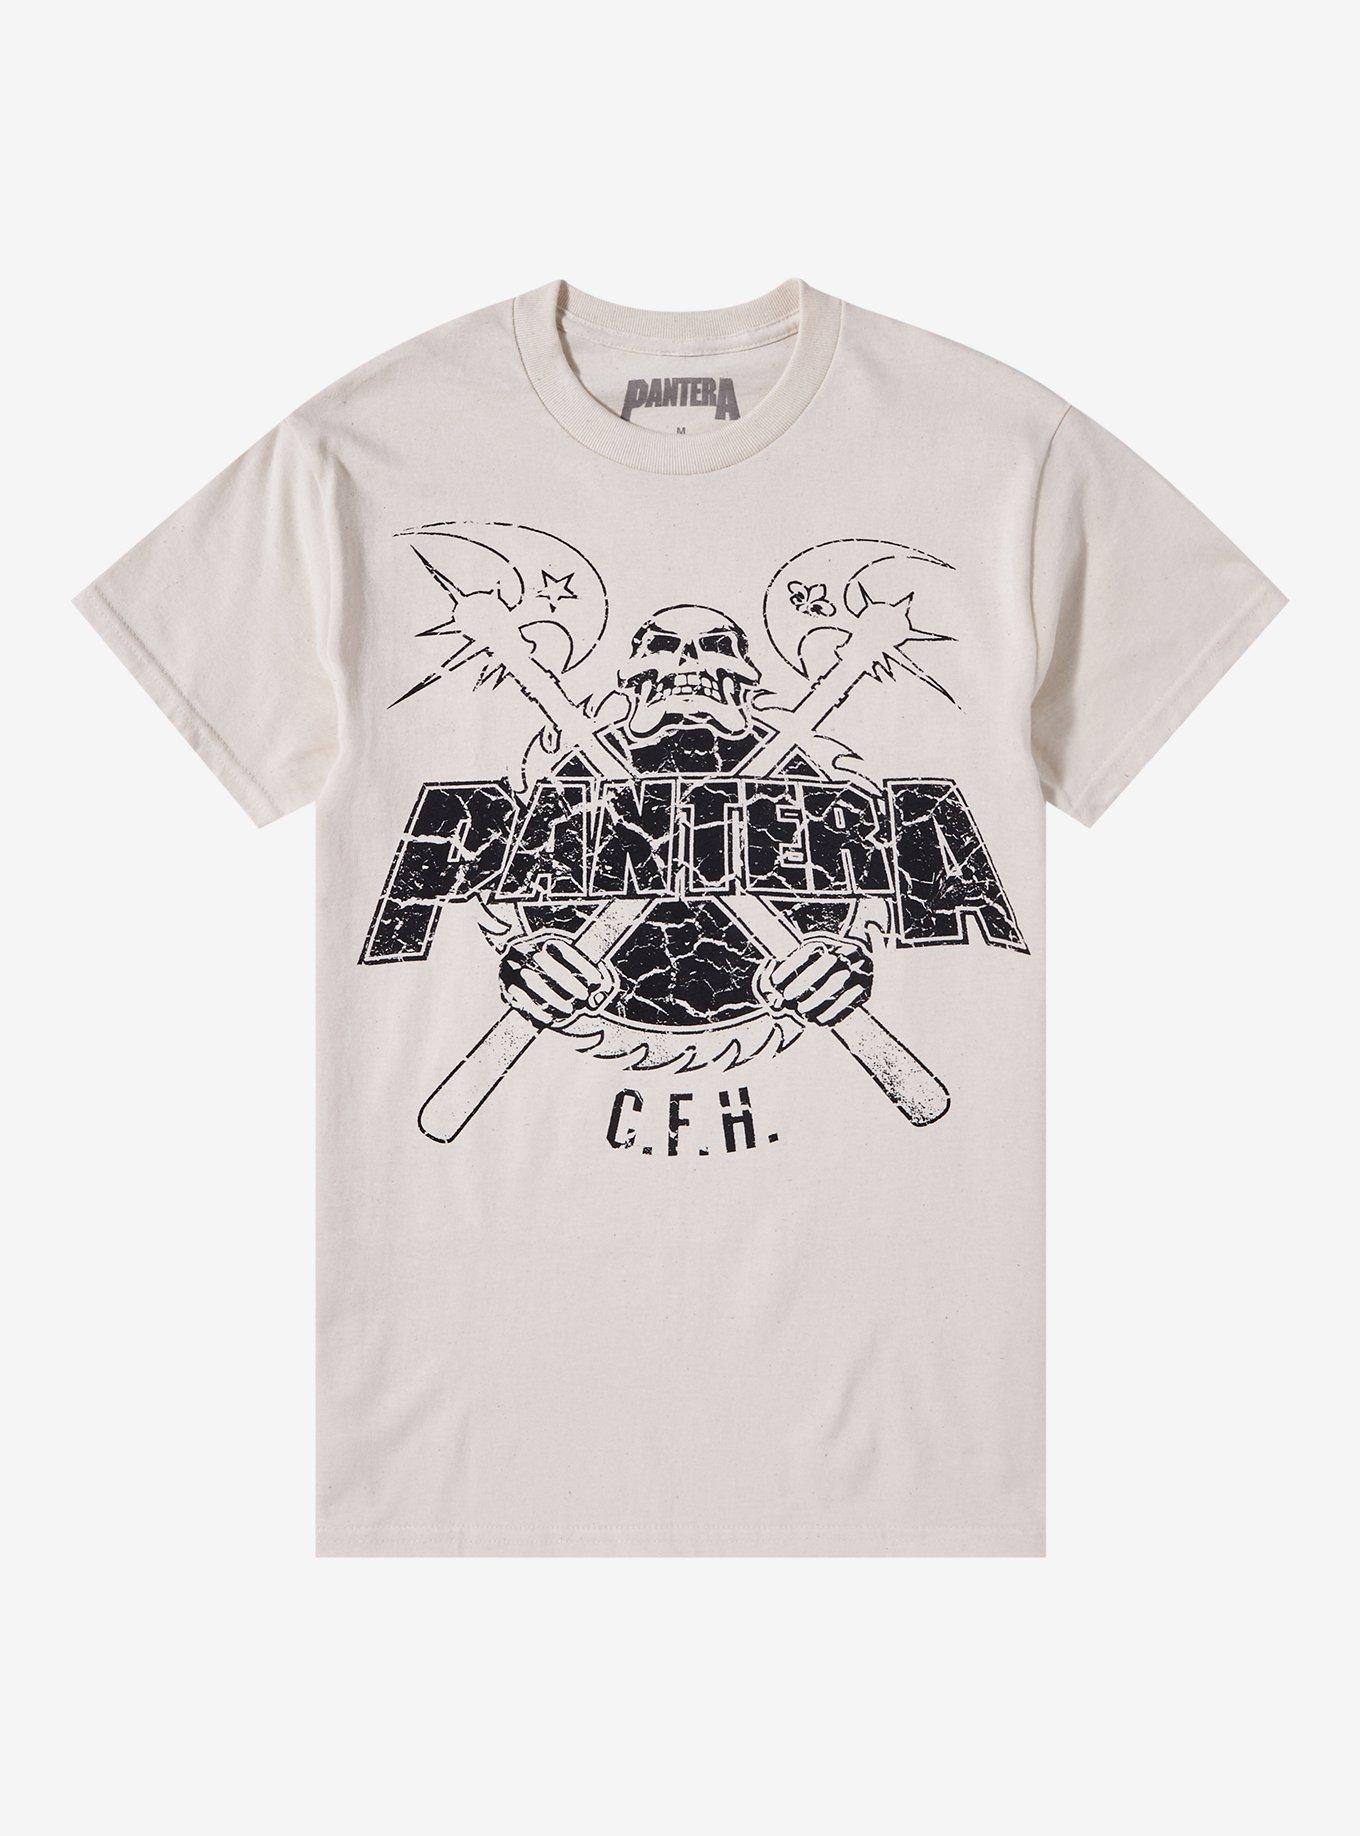 Pantera Cowboys From Hell Line Art Boyfriend Fit Girls T-Shirt, NATURAL, hi-res